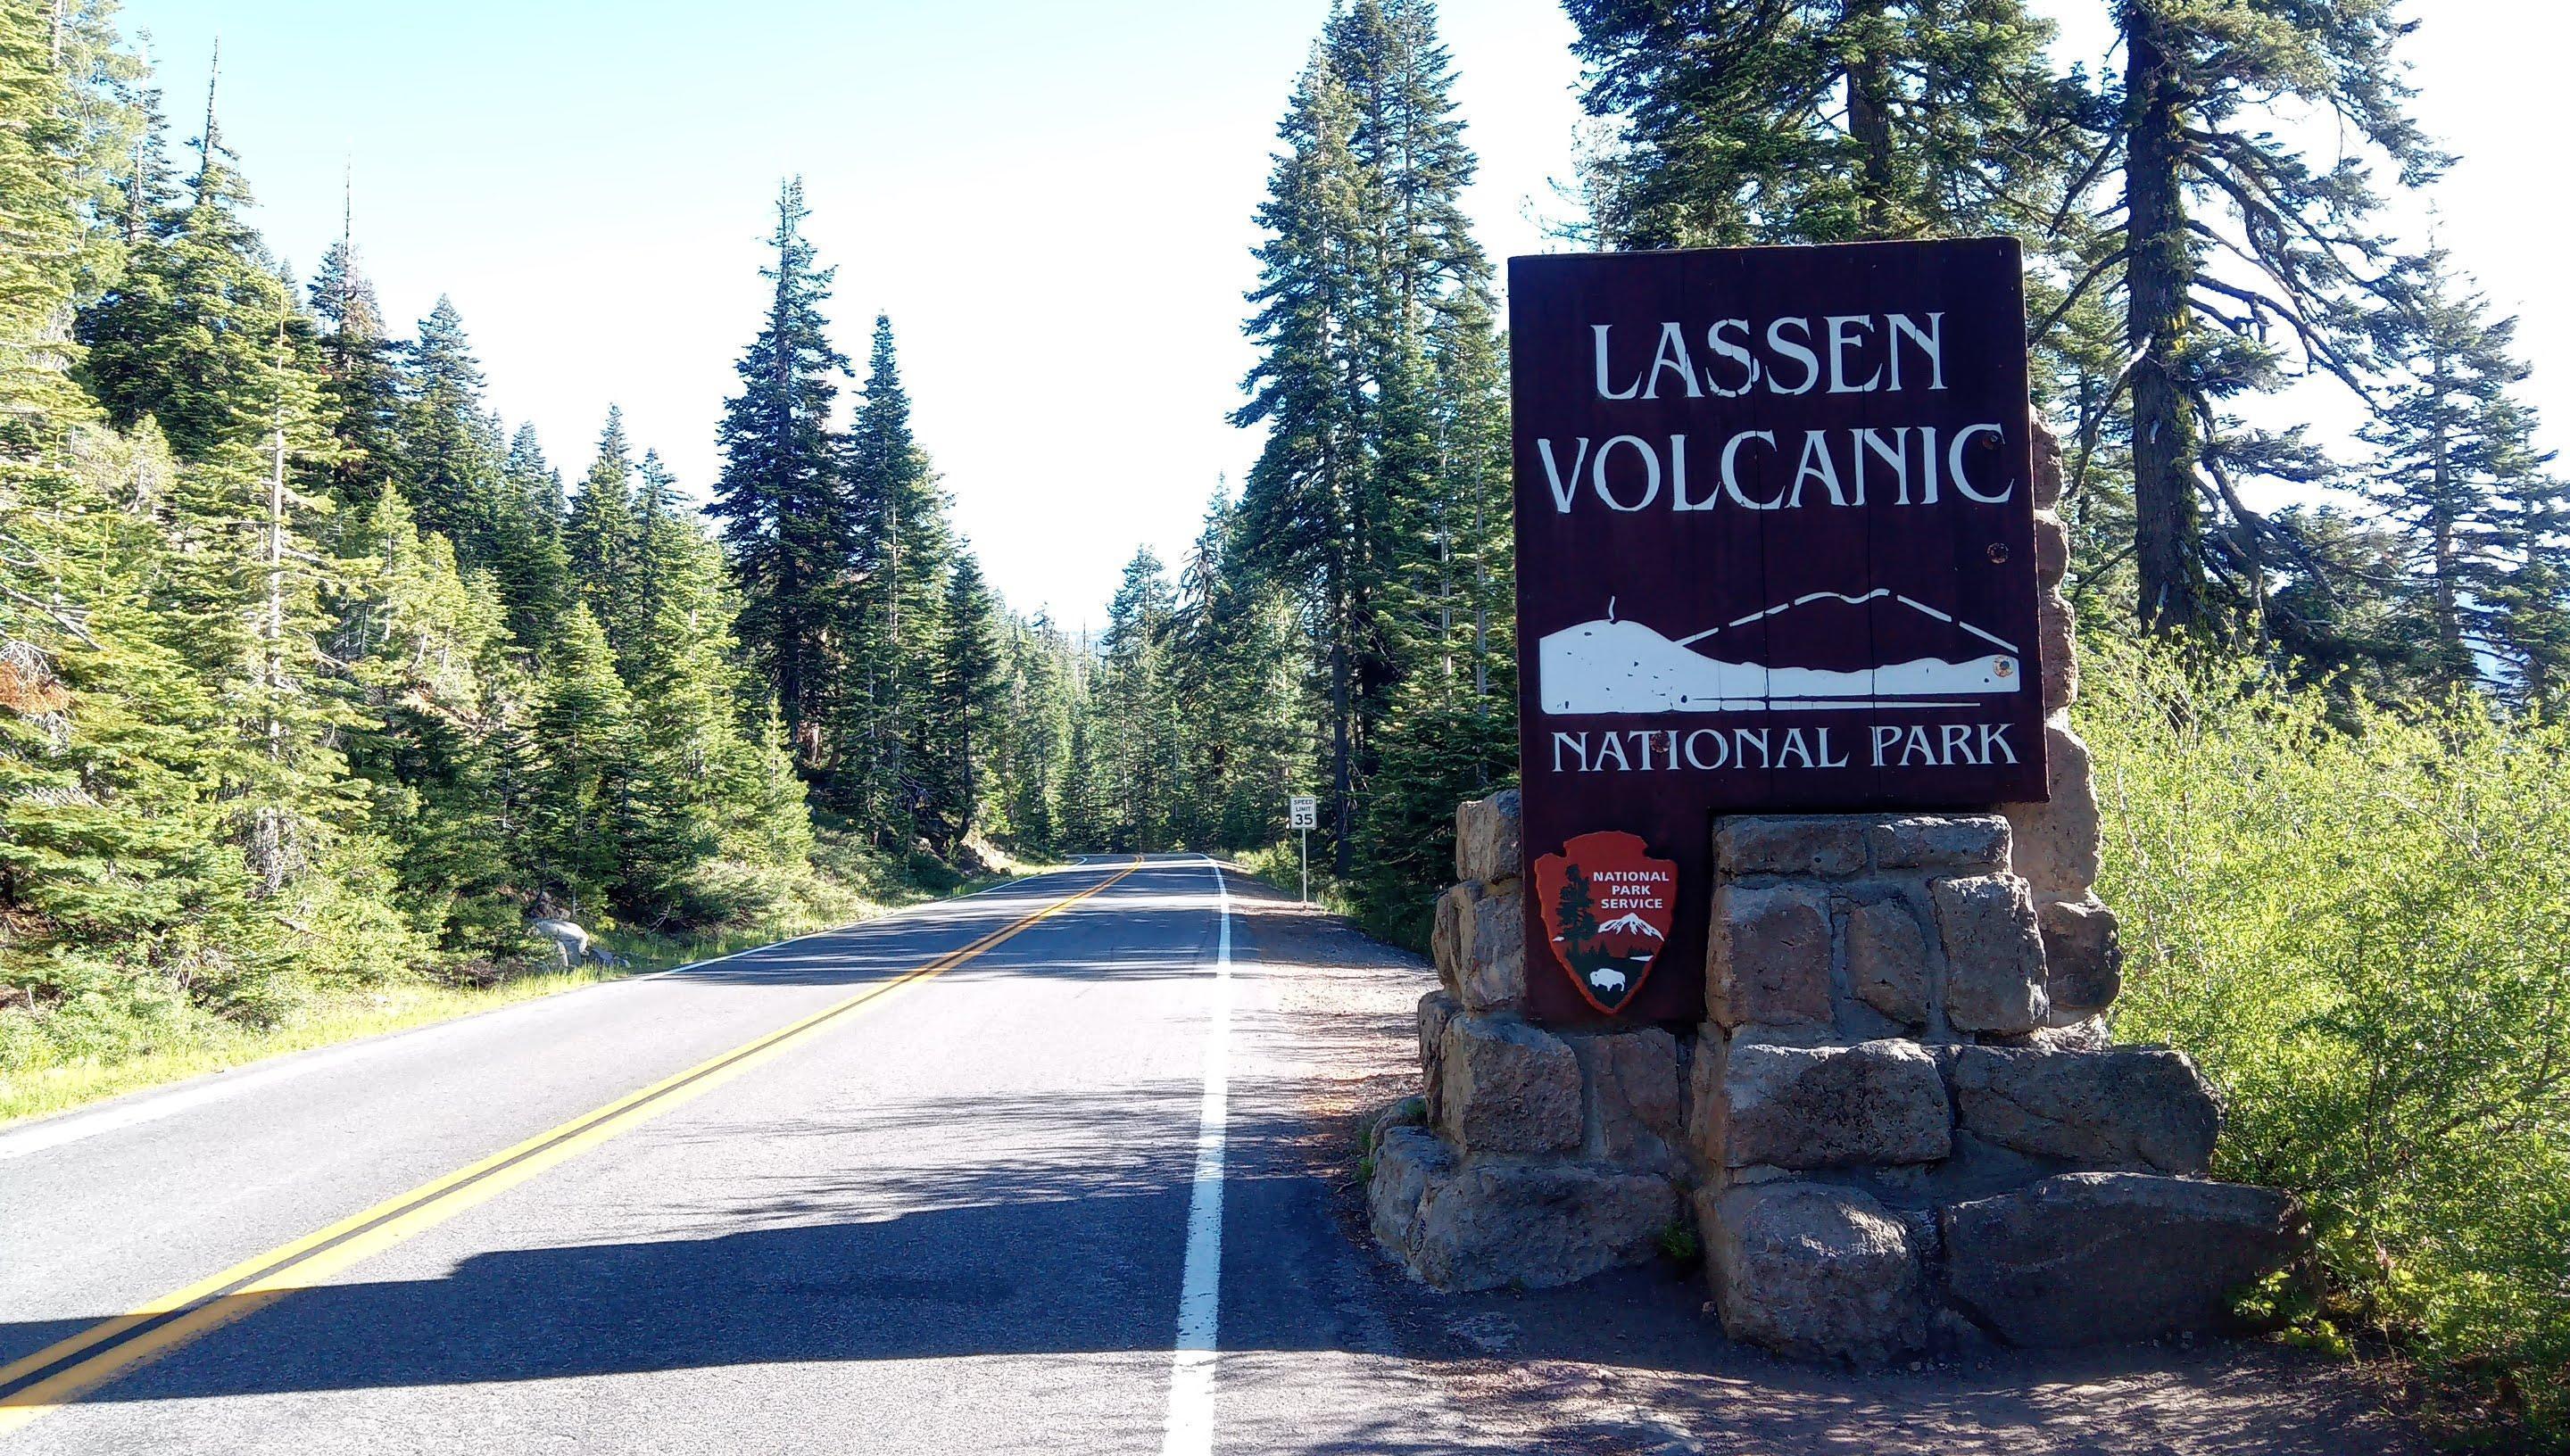 Three days in Lassen - Part 1, Brokeoff mountain 2020-07-03